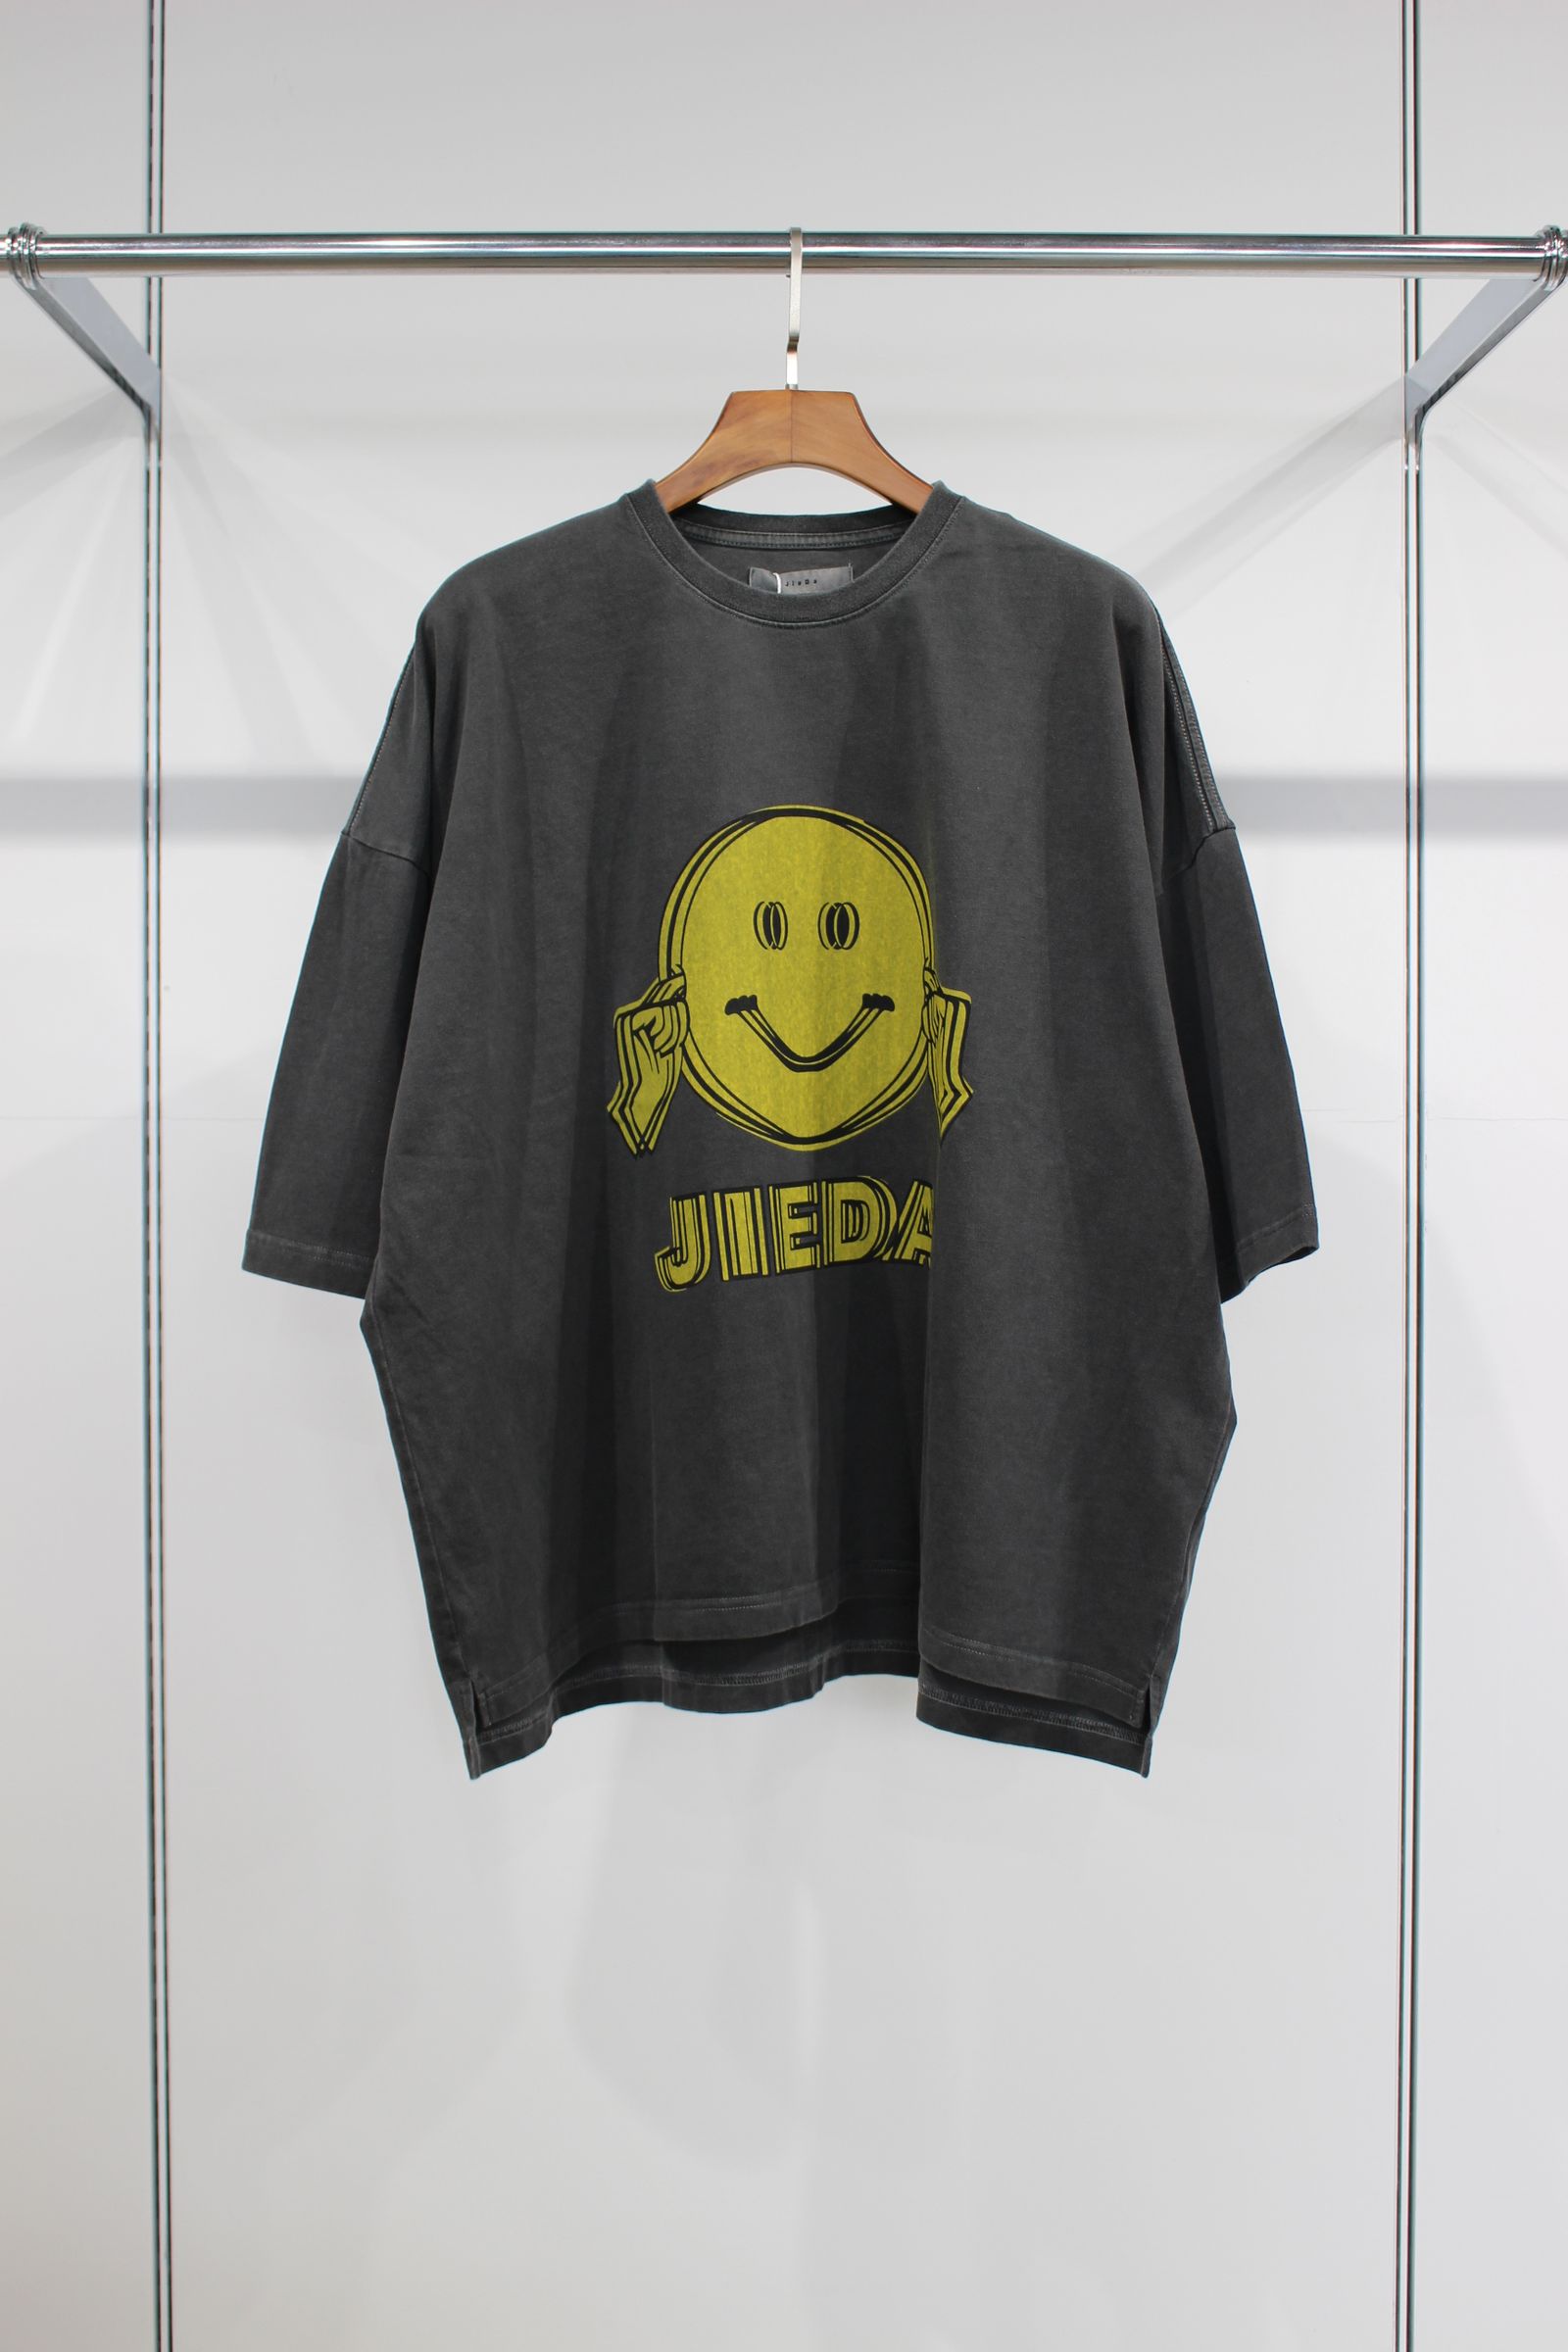 JieDa - JIEDA SMILE OVERSIZED TEE/プリントTシャツ/ブラック | NapsNote